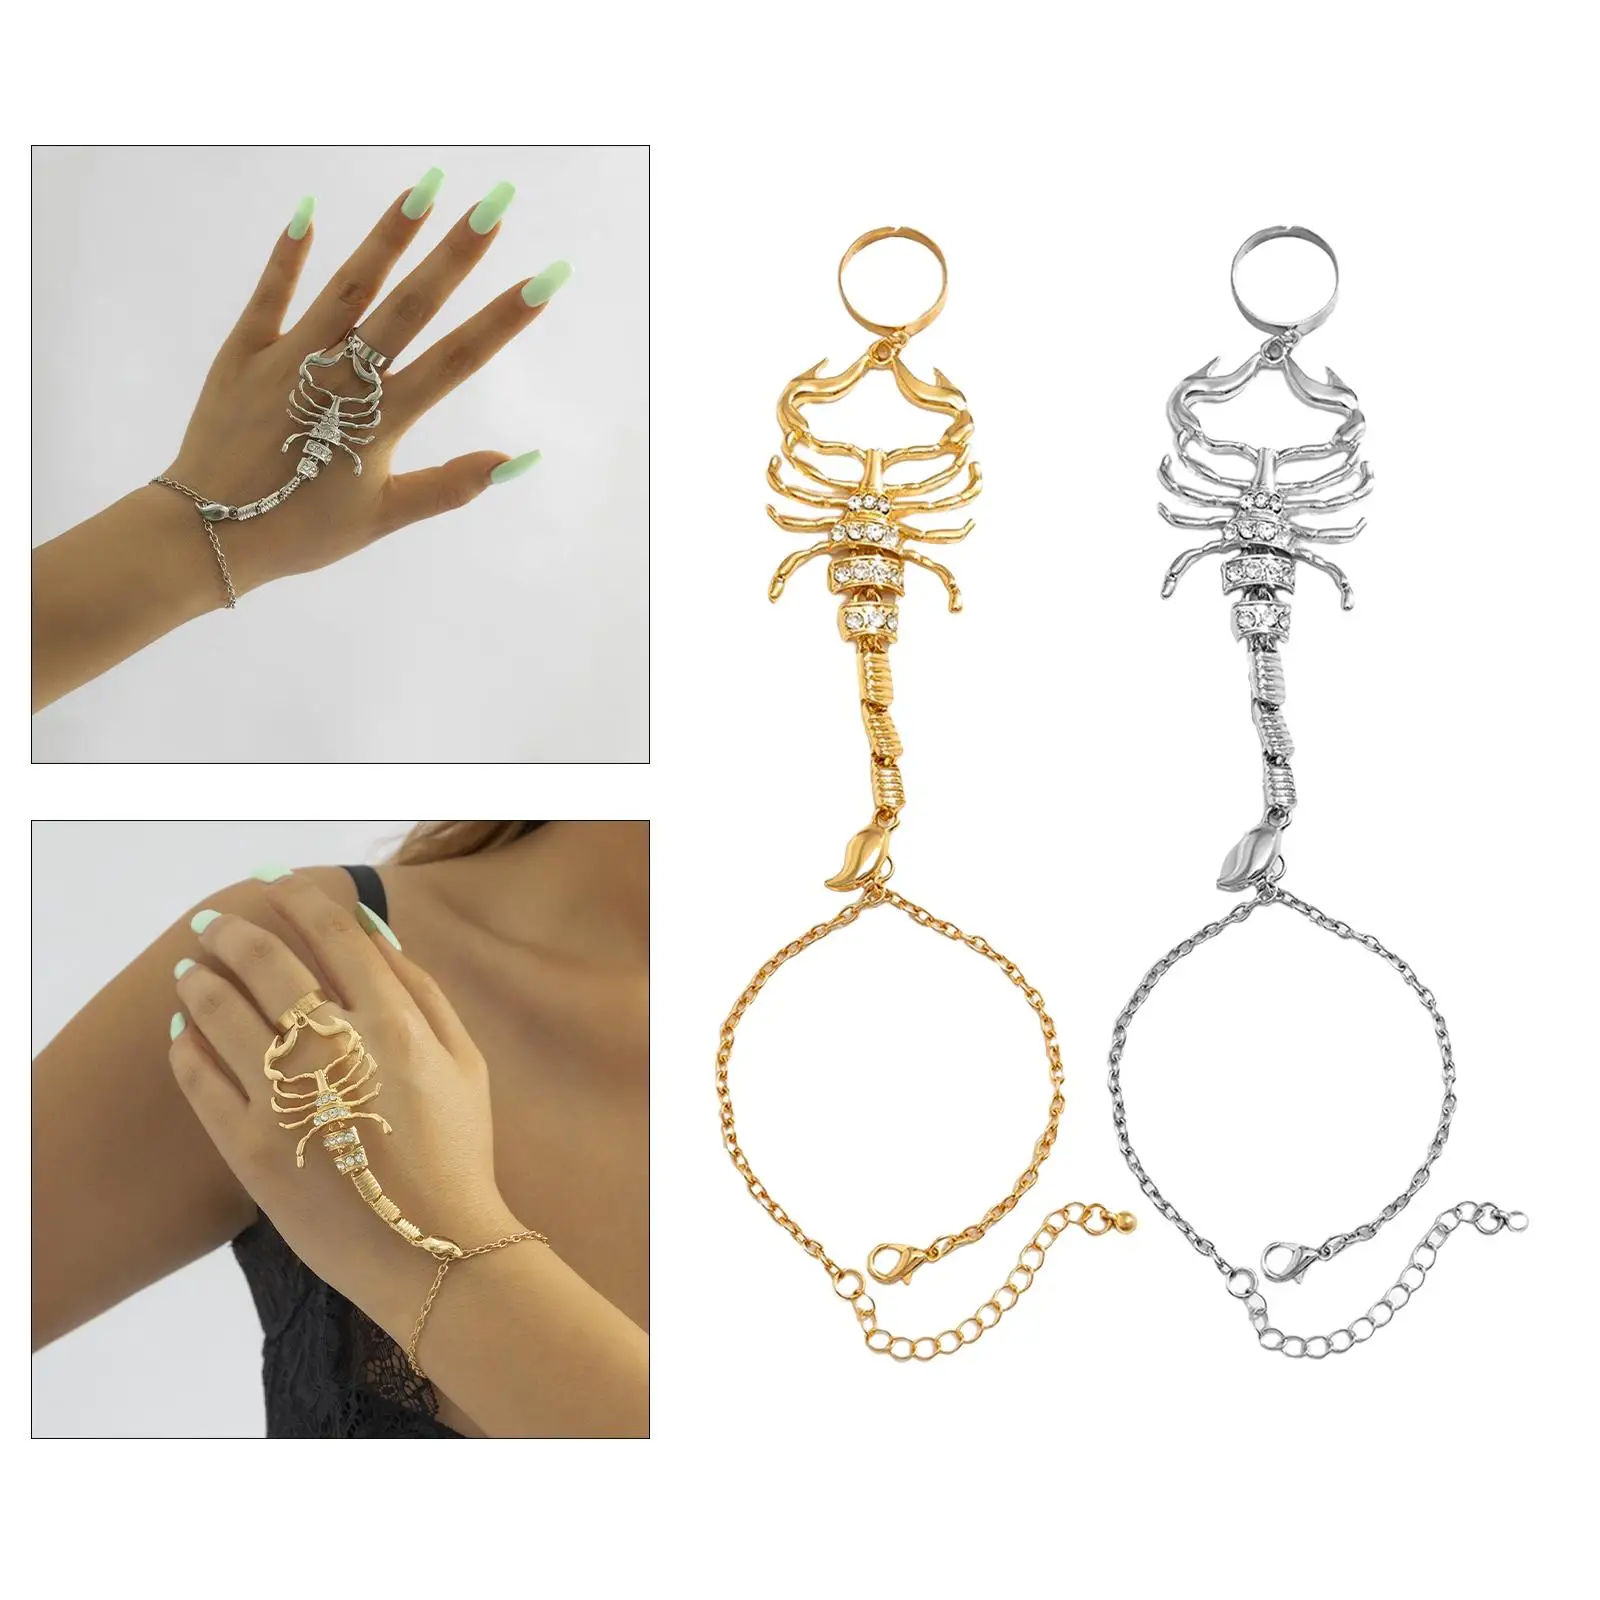 Scorpion Finger Ring Hand Chain Rhinestone Gothic One Size Bracelet for Girls Teens